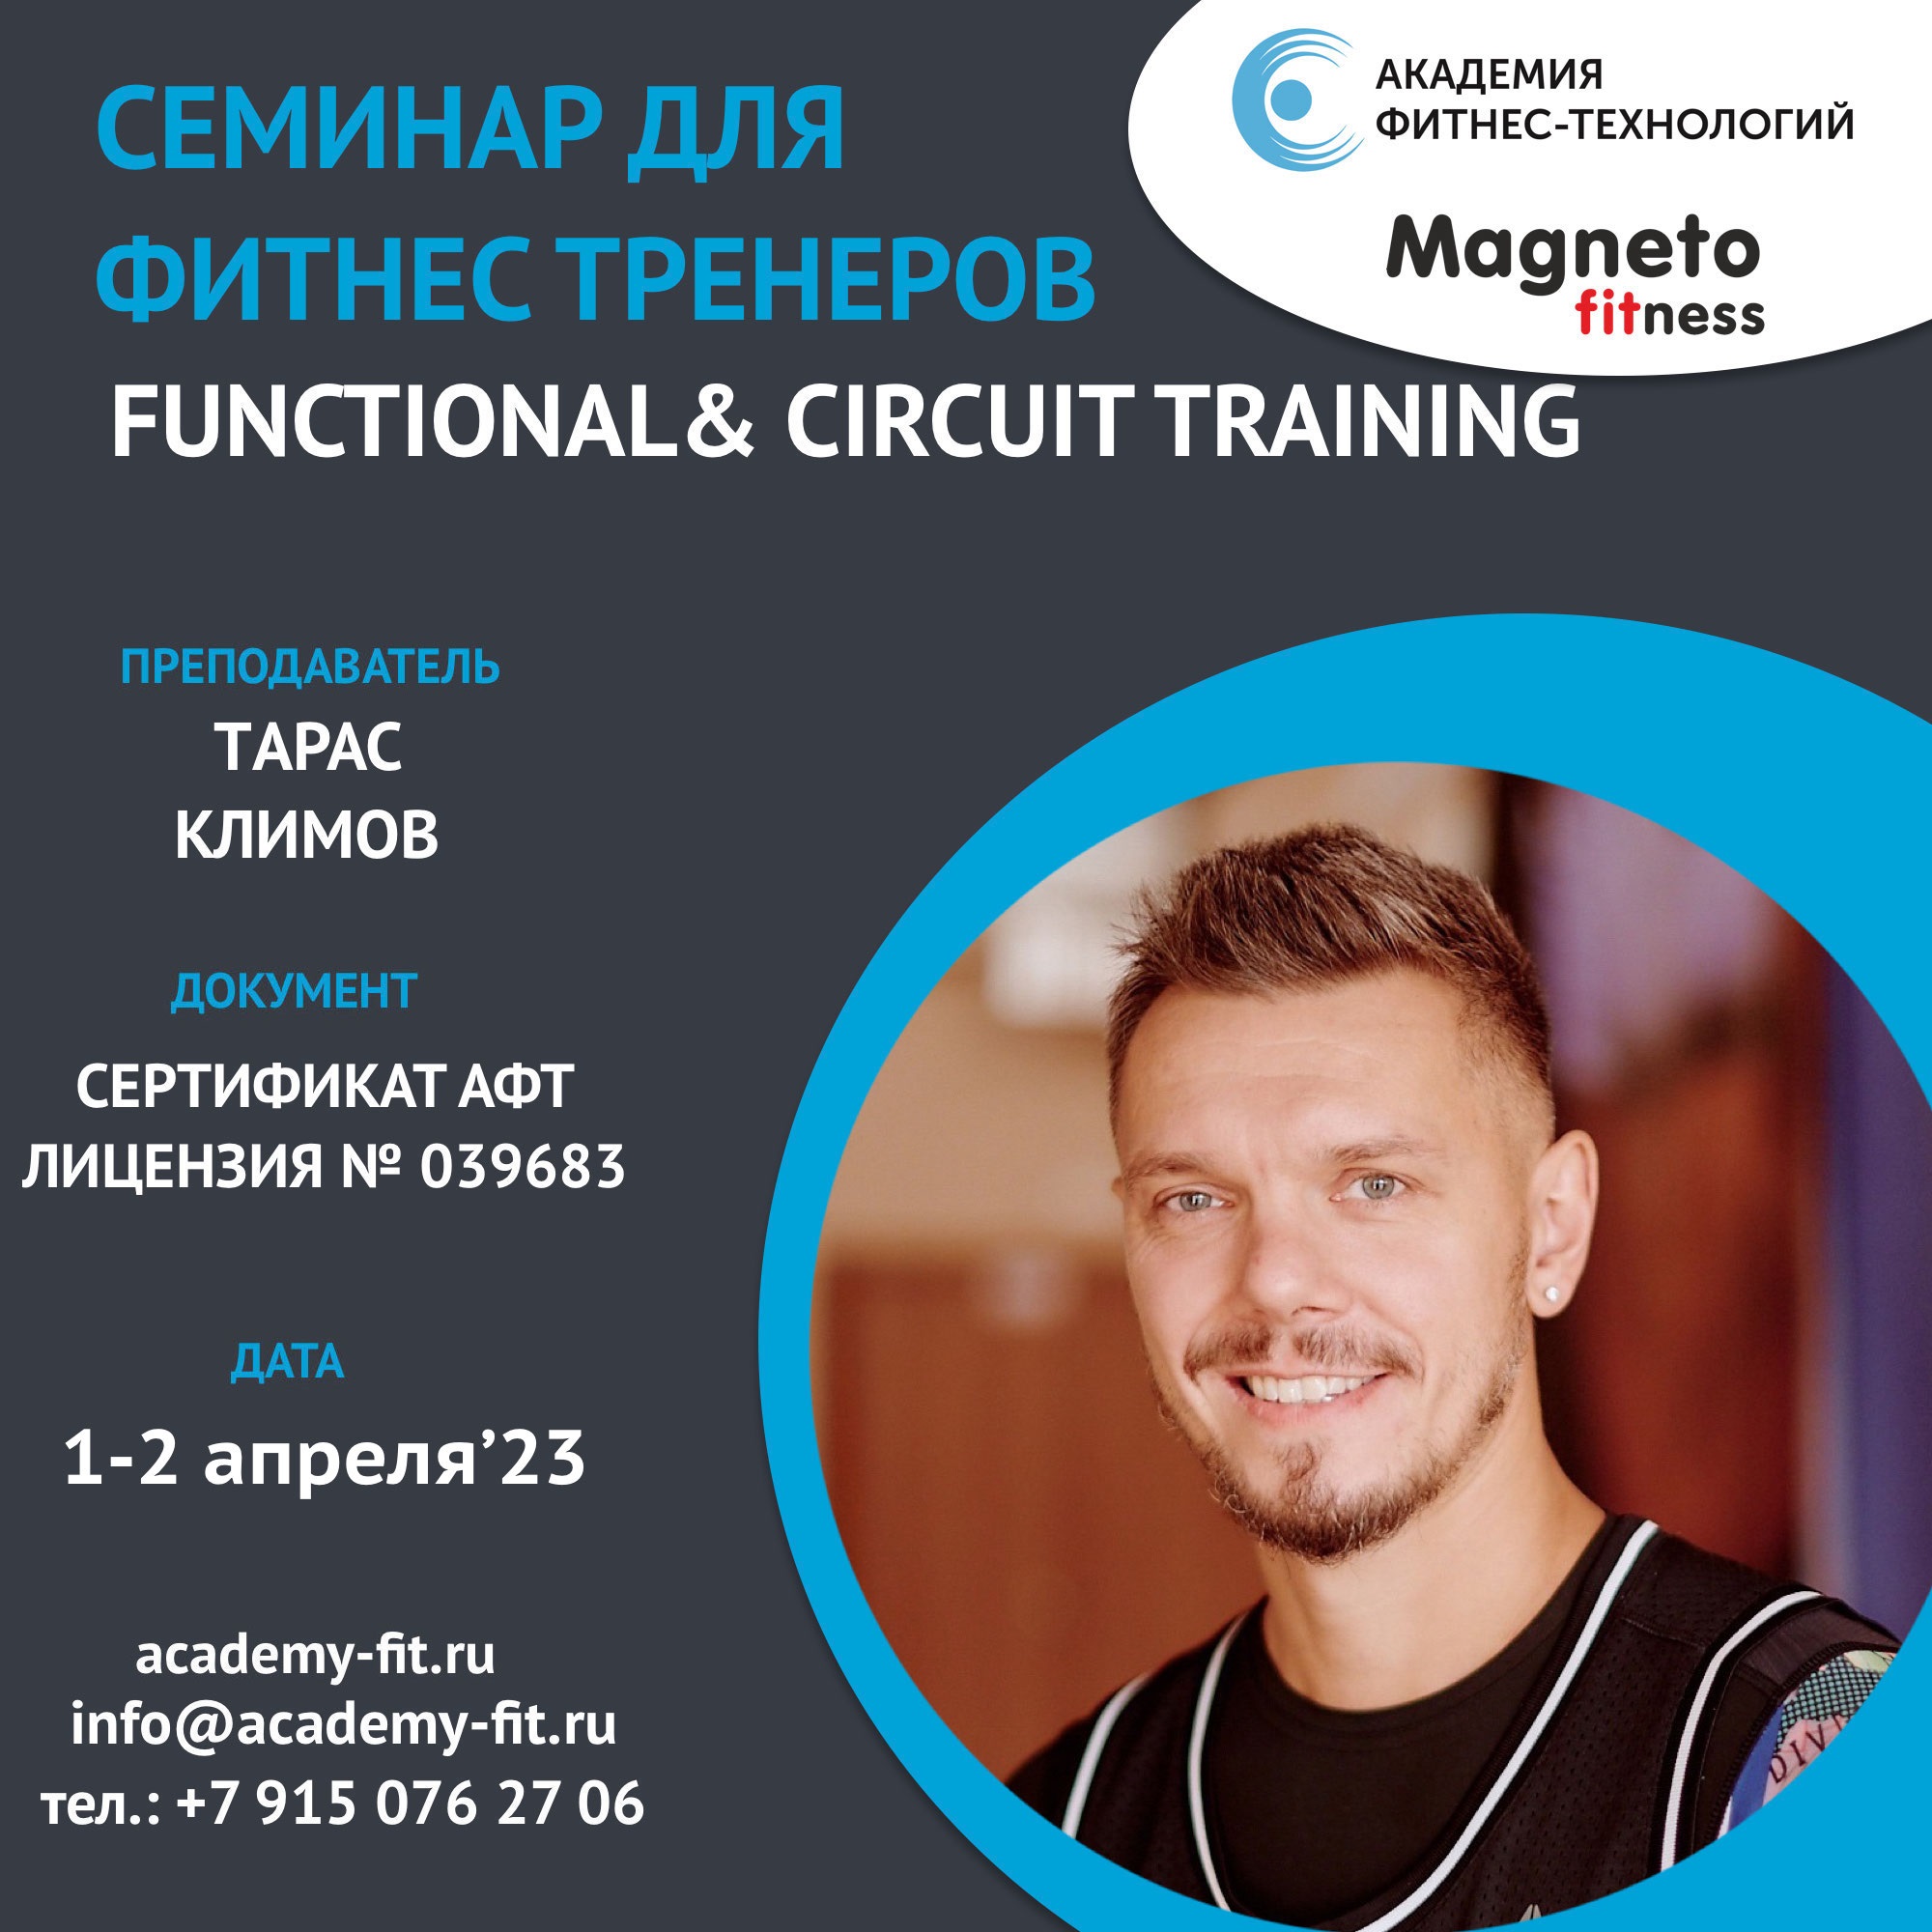 1-2 апреля практический семинар «Functional & Circuit Training» - Magneto Fitness Дмитров